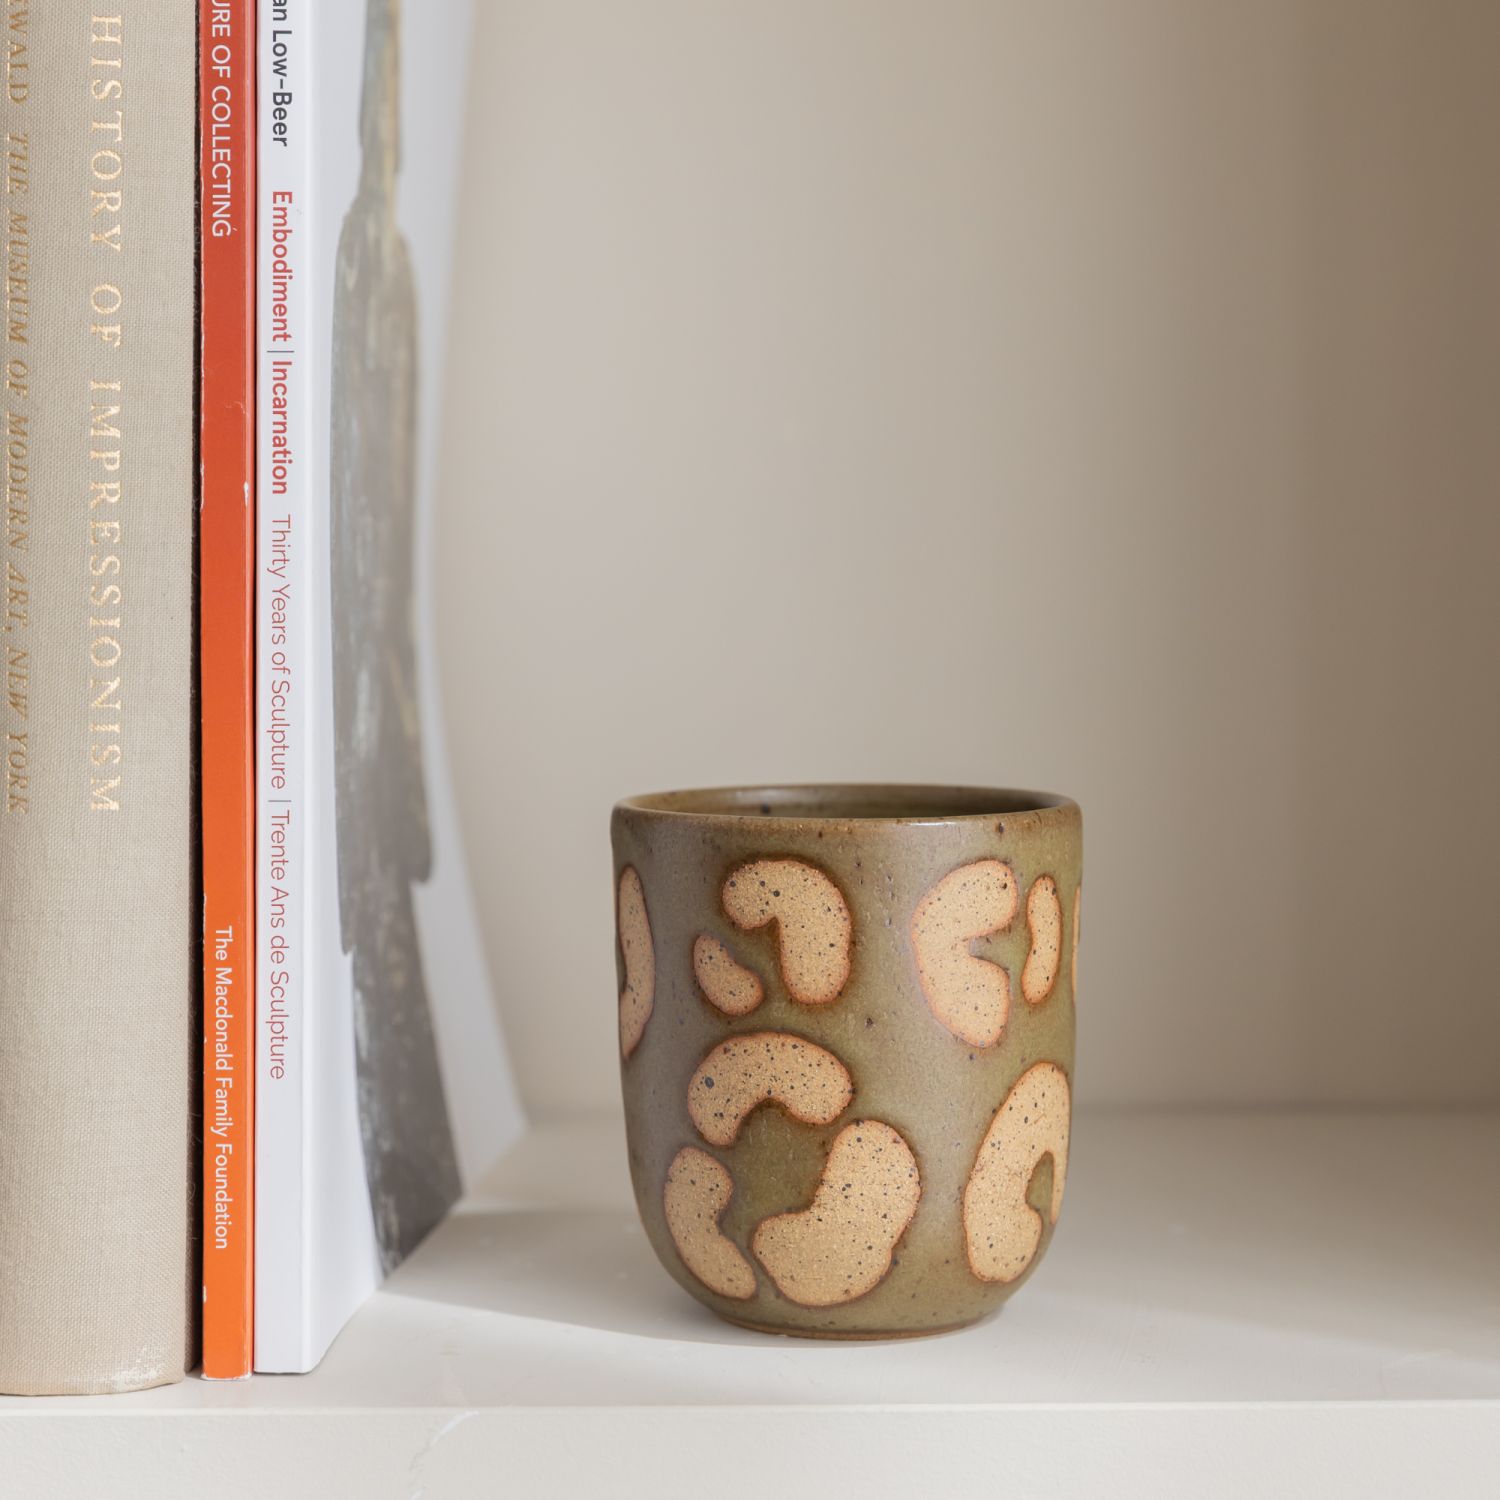 Mima Ceramics: Green Print Cup Product Image 1 of 3